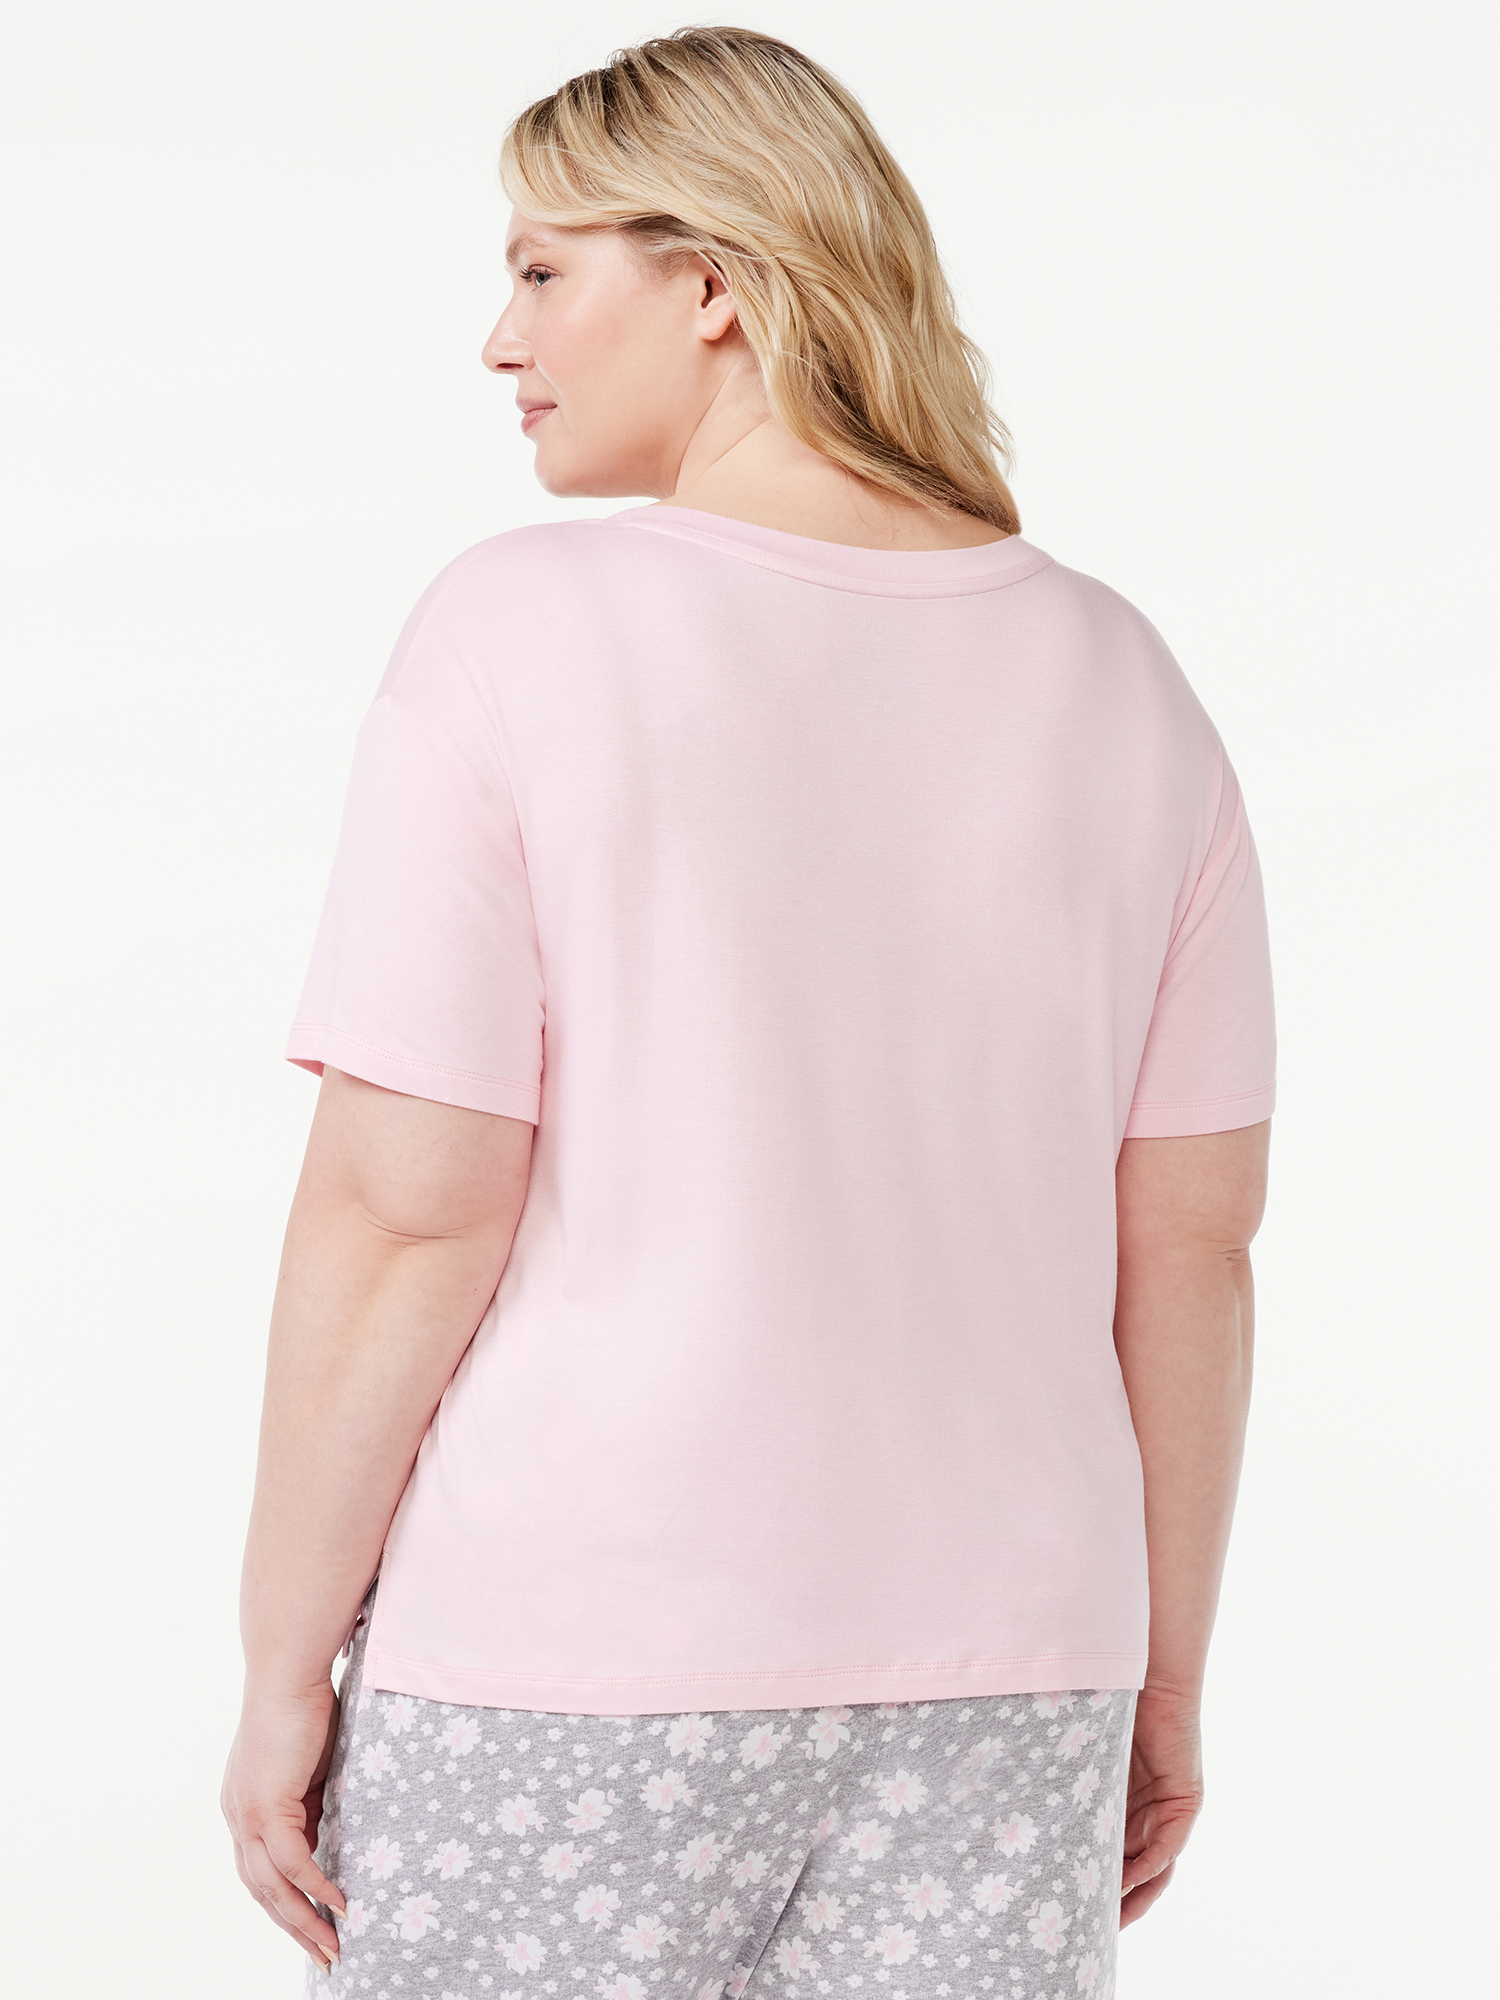 Joyspun Women's V-Neck Sleep T-Shirt, Sizes S to 3X - image 4 of 5